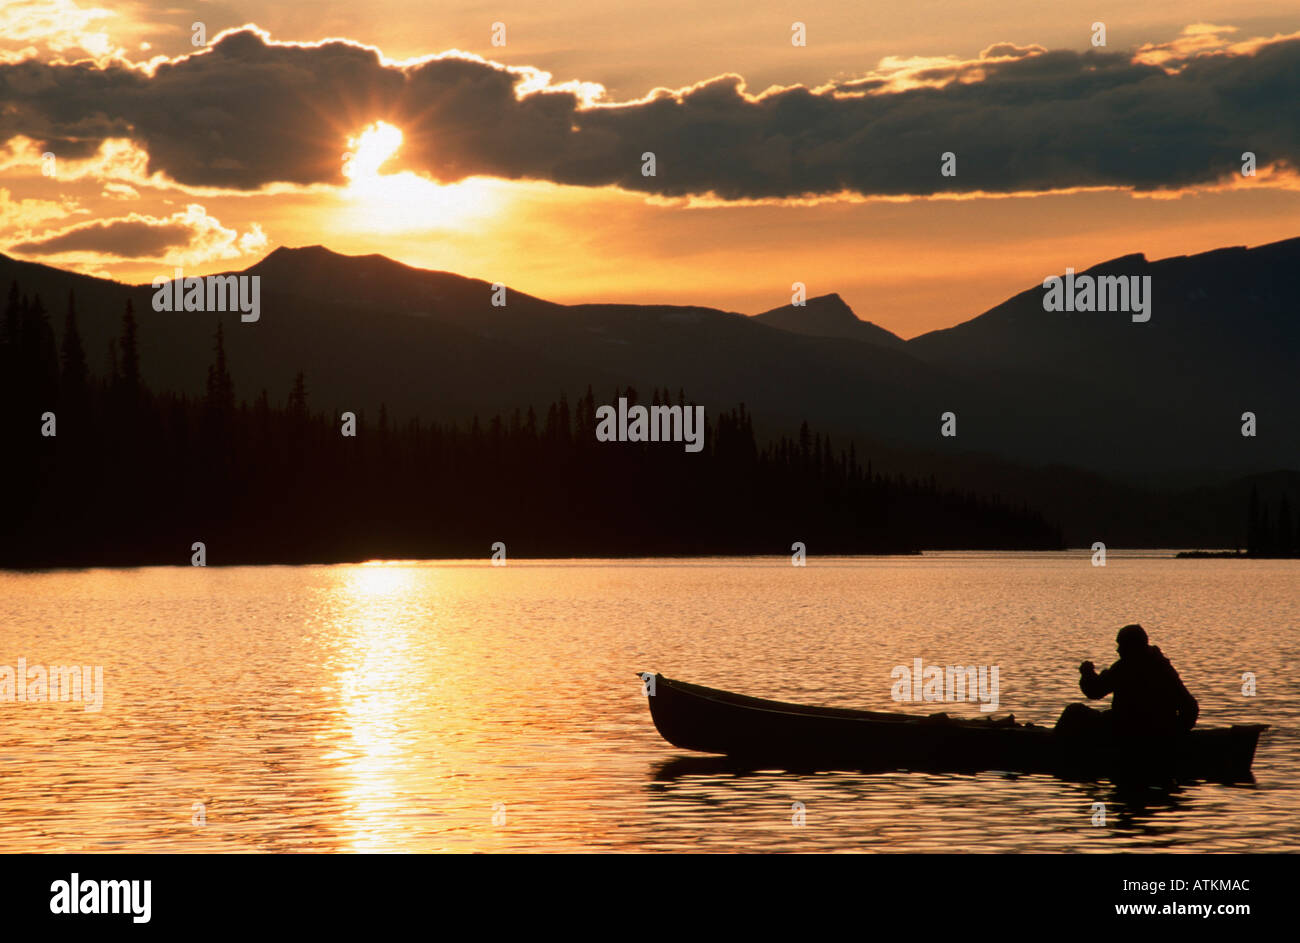 Canoe at sunset / Kanu bei Sonnenuntergang Stock Photo